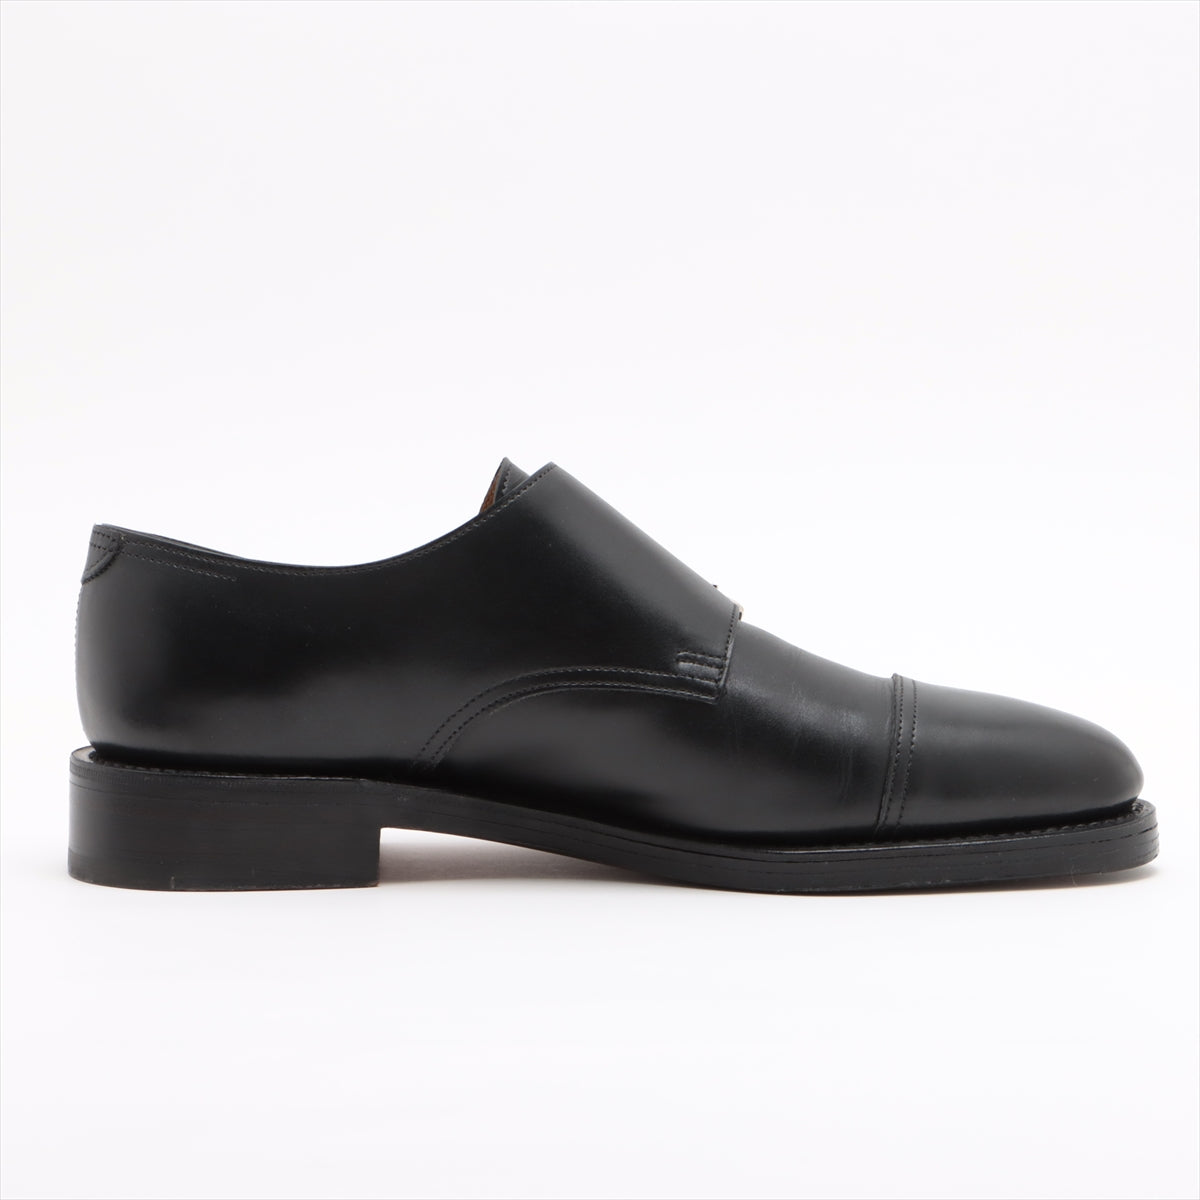 John Lobb Leather Dress shoes 6E Men's Black william Double monk strap